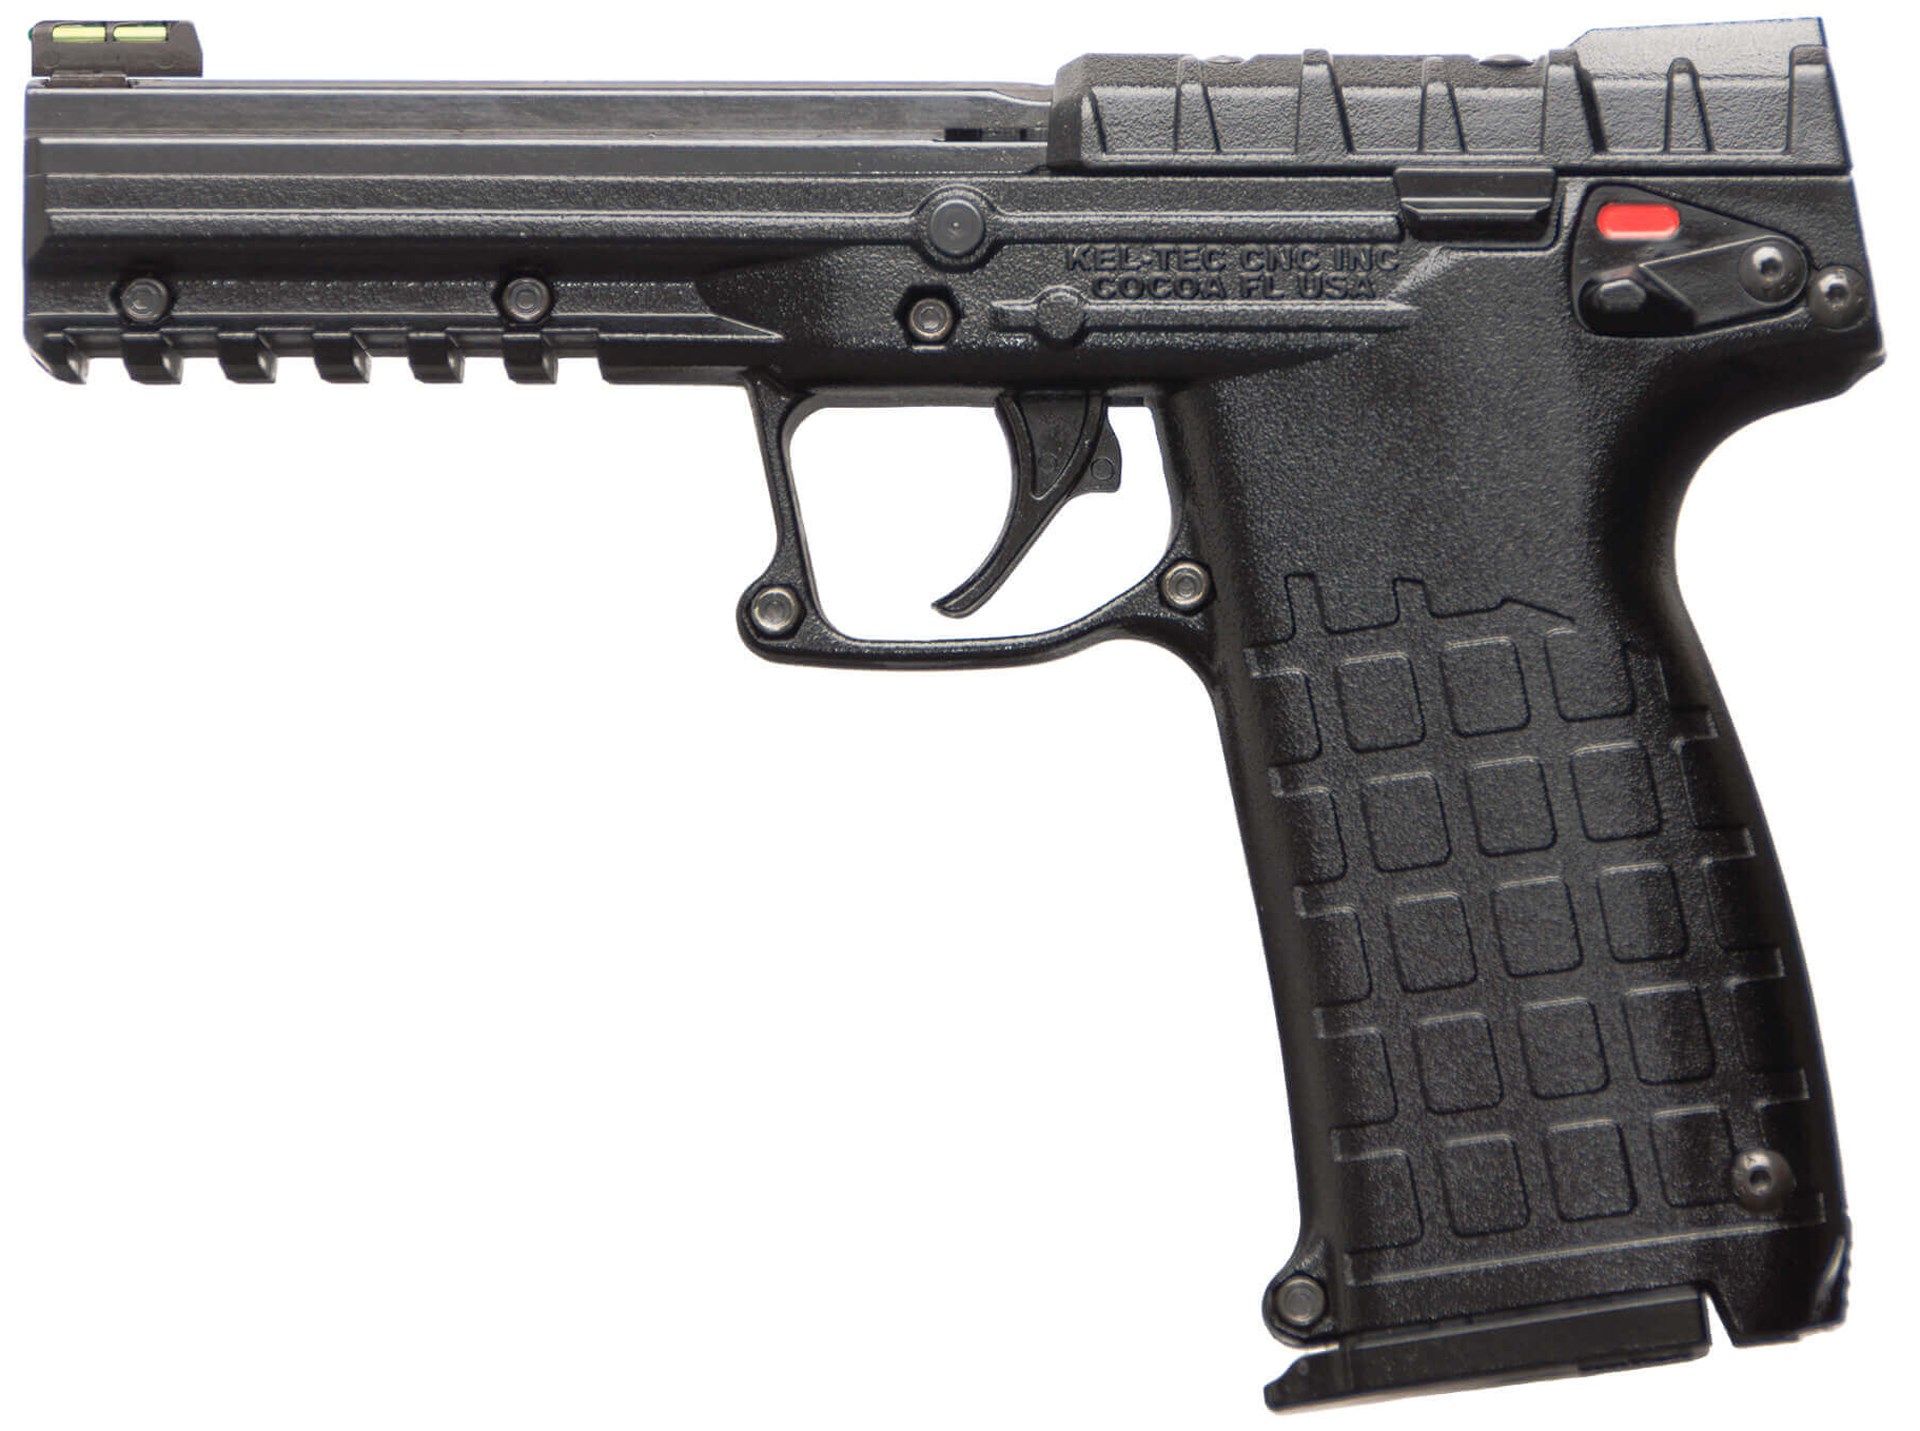 Keltec PMR30 low-recoil defense tool gun pistol handgun black plastic left-side view on white background